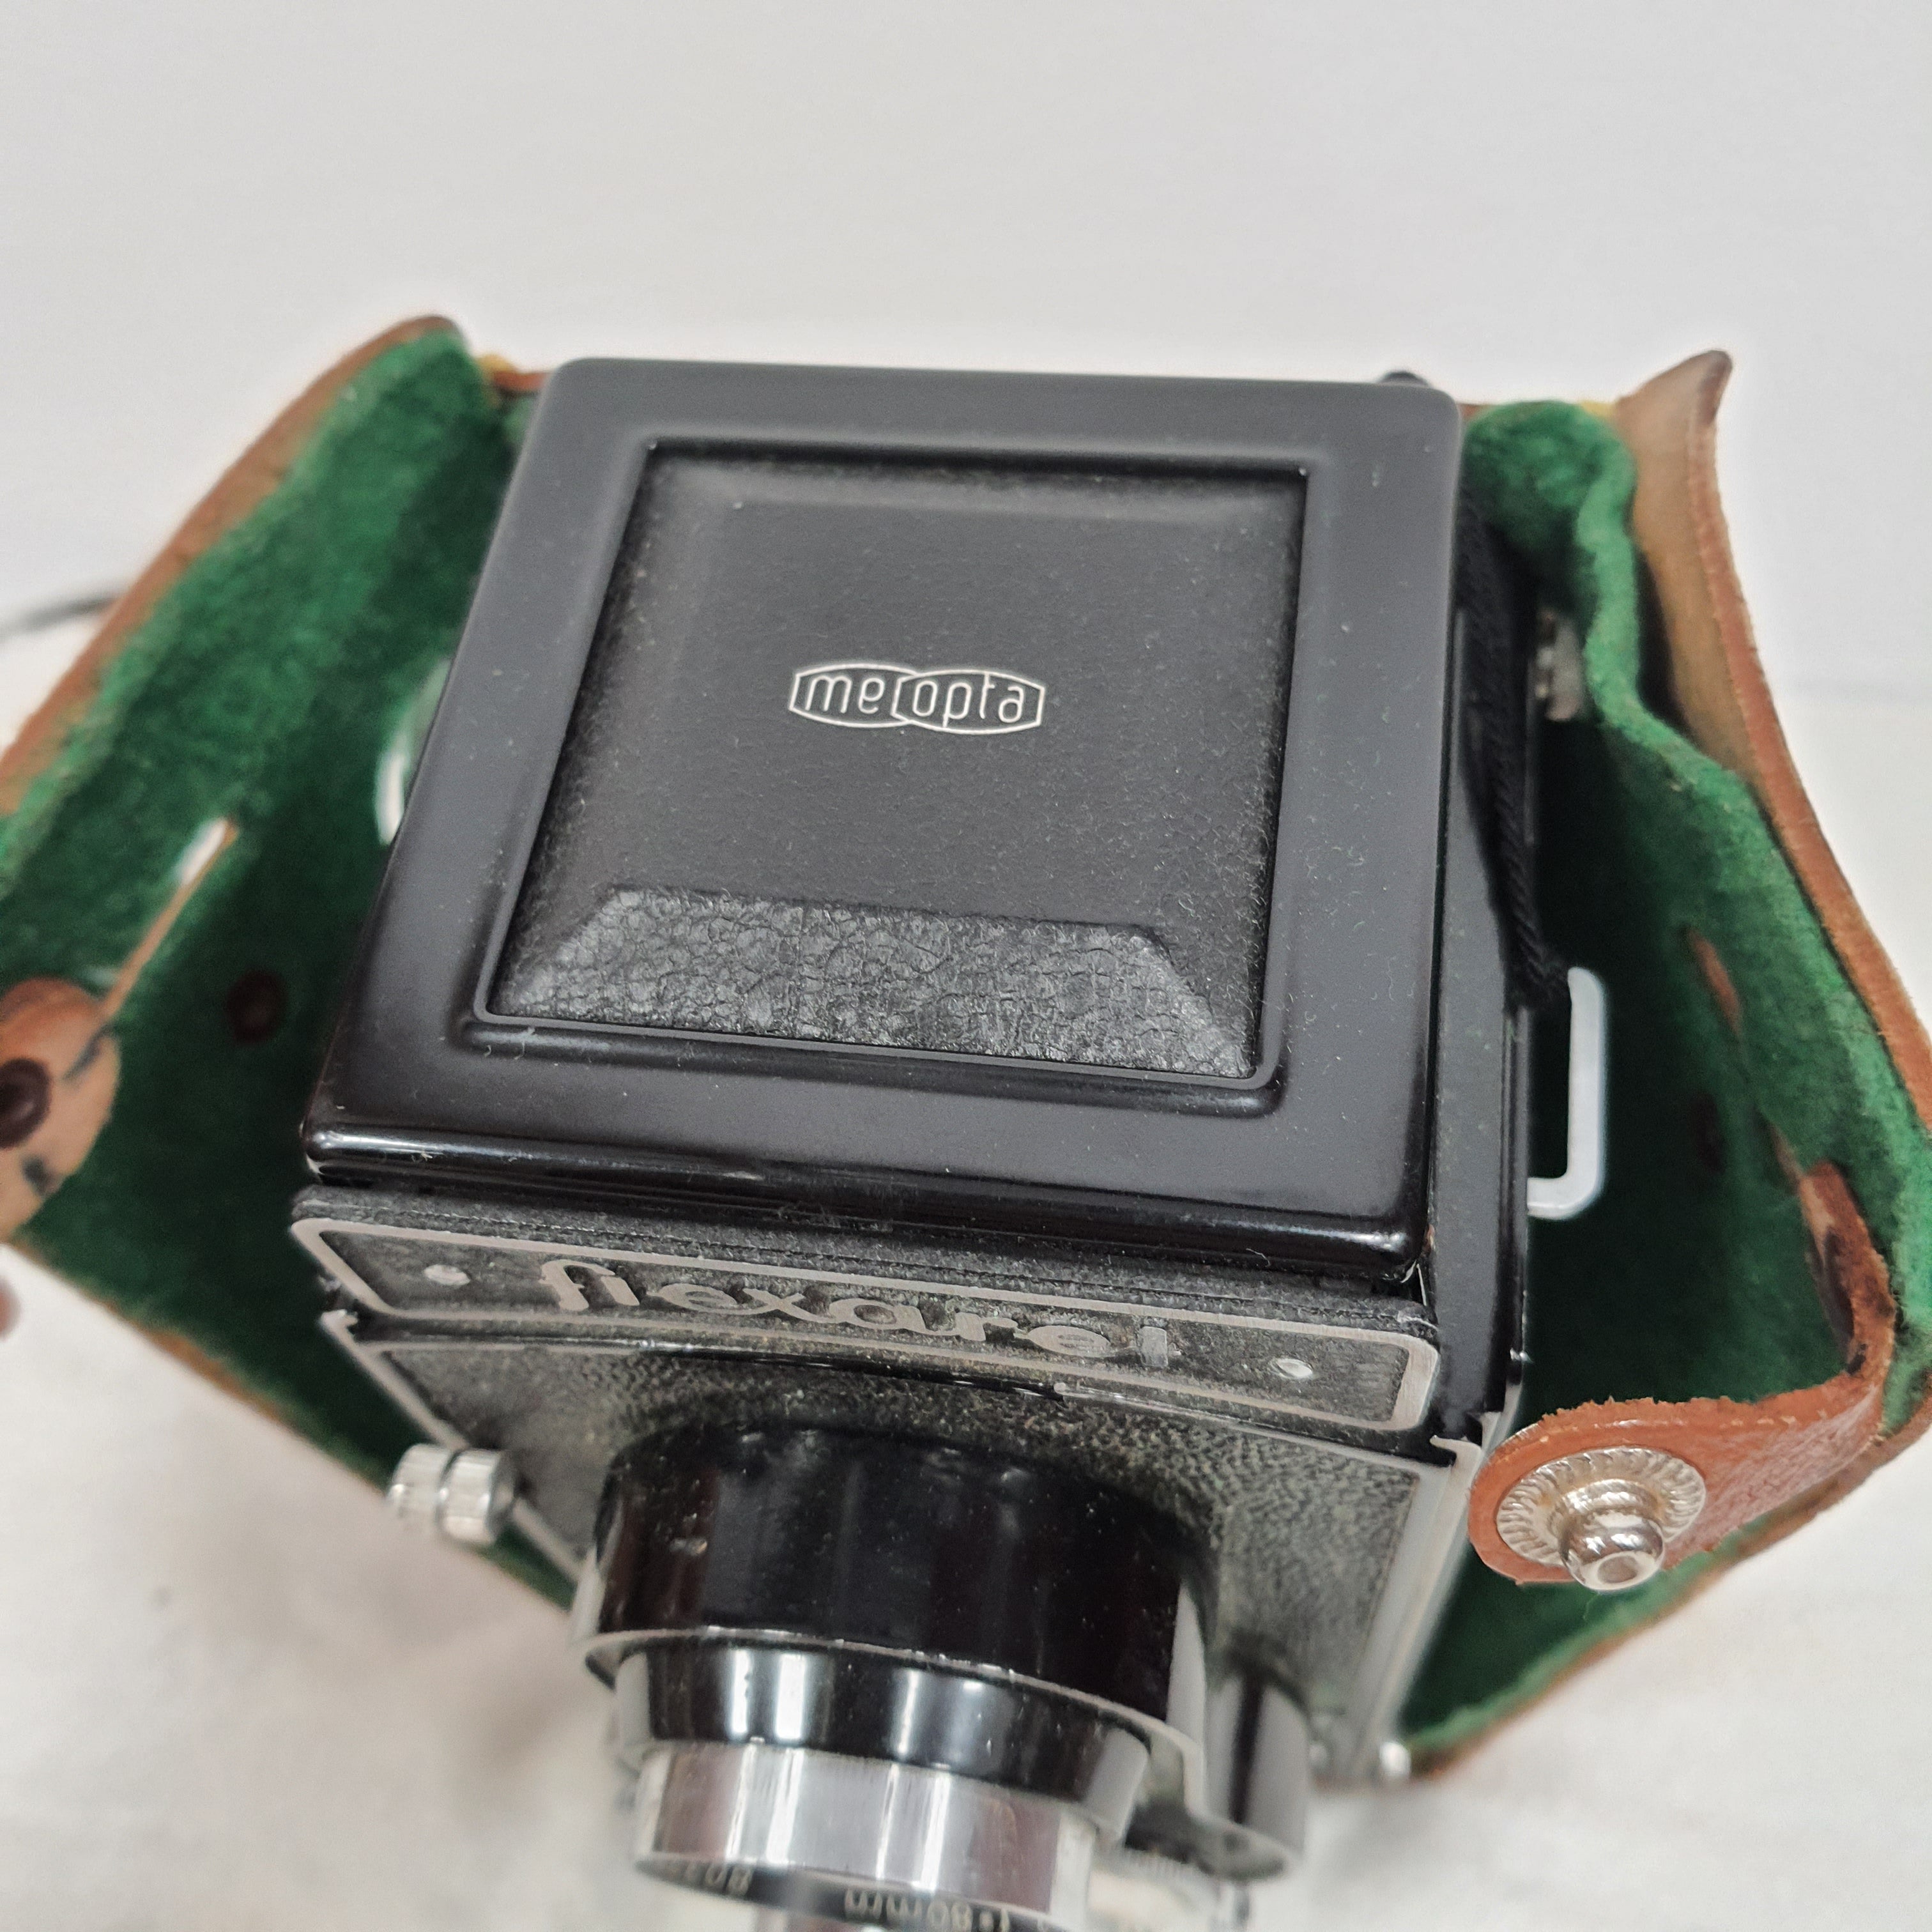 Fotoaparát Flexaret IV s pouzdrem, Československo
